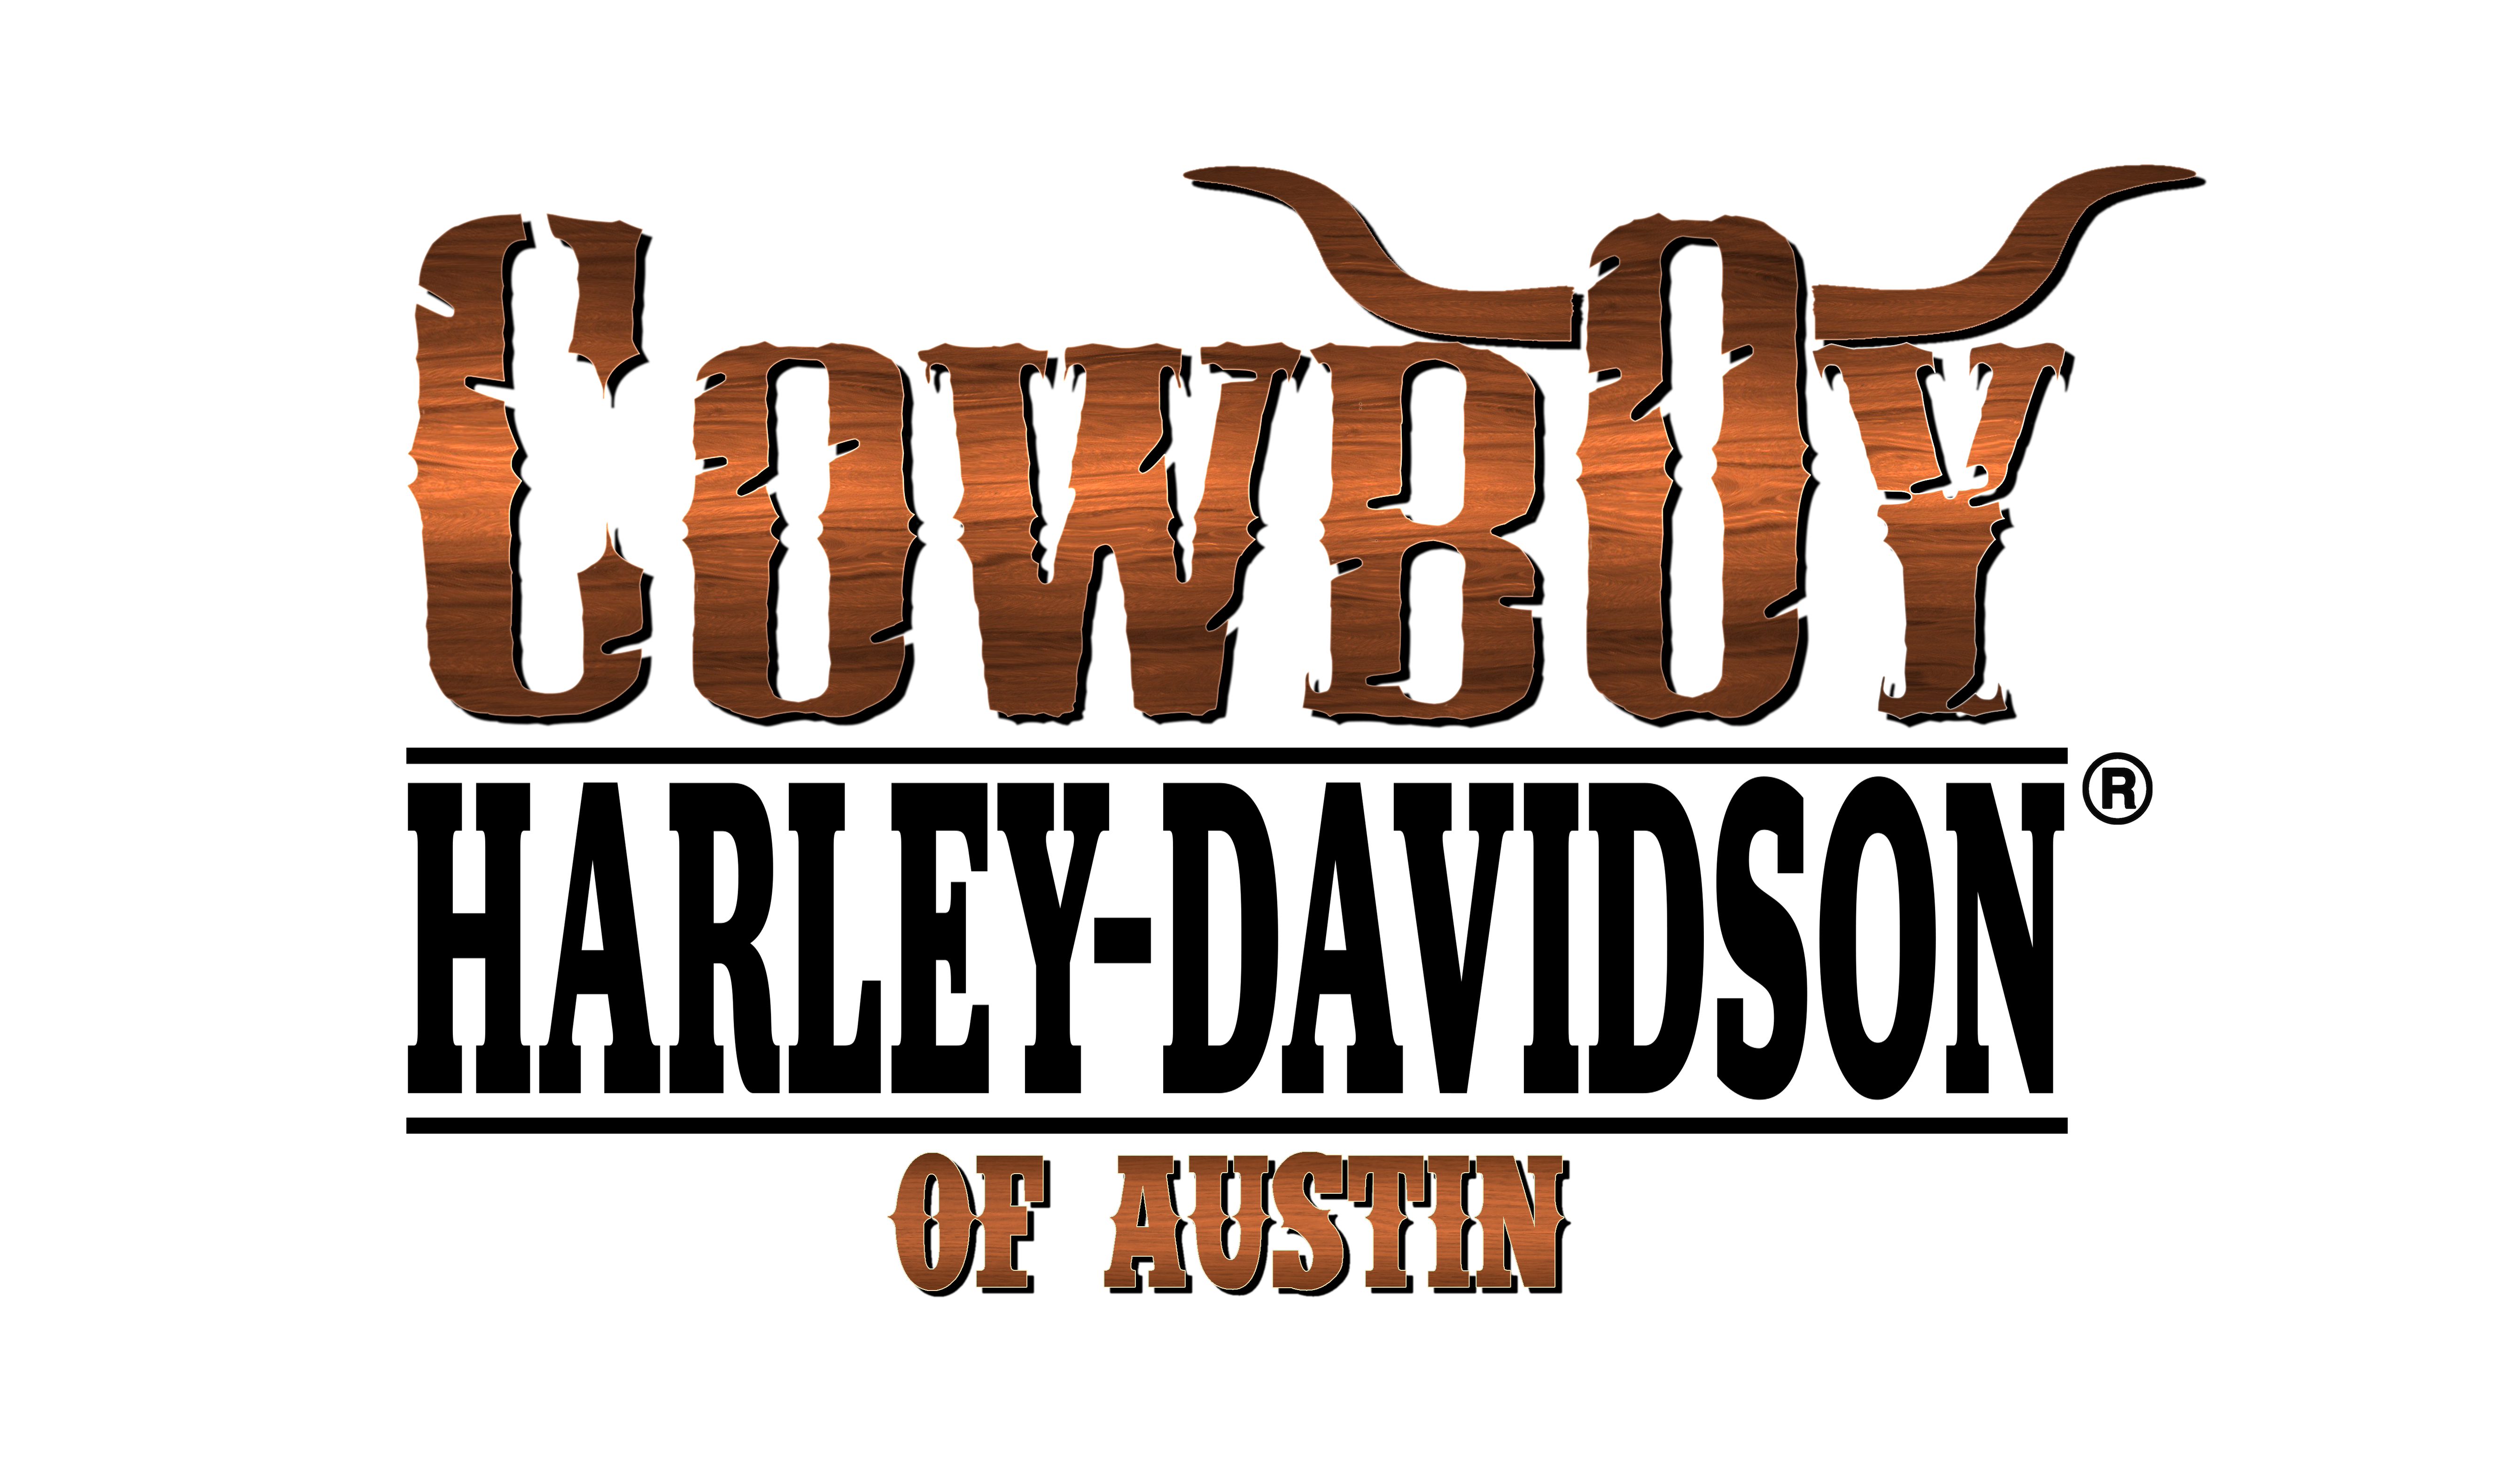 Cowboy Harley Davidson of Austin